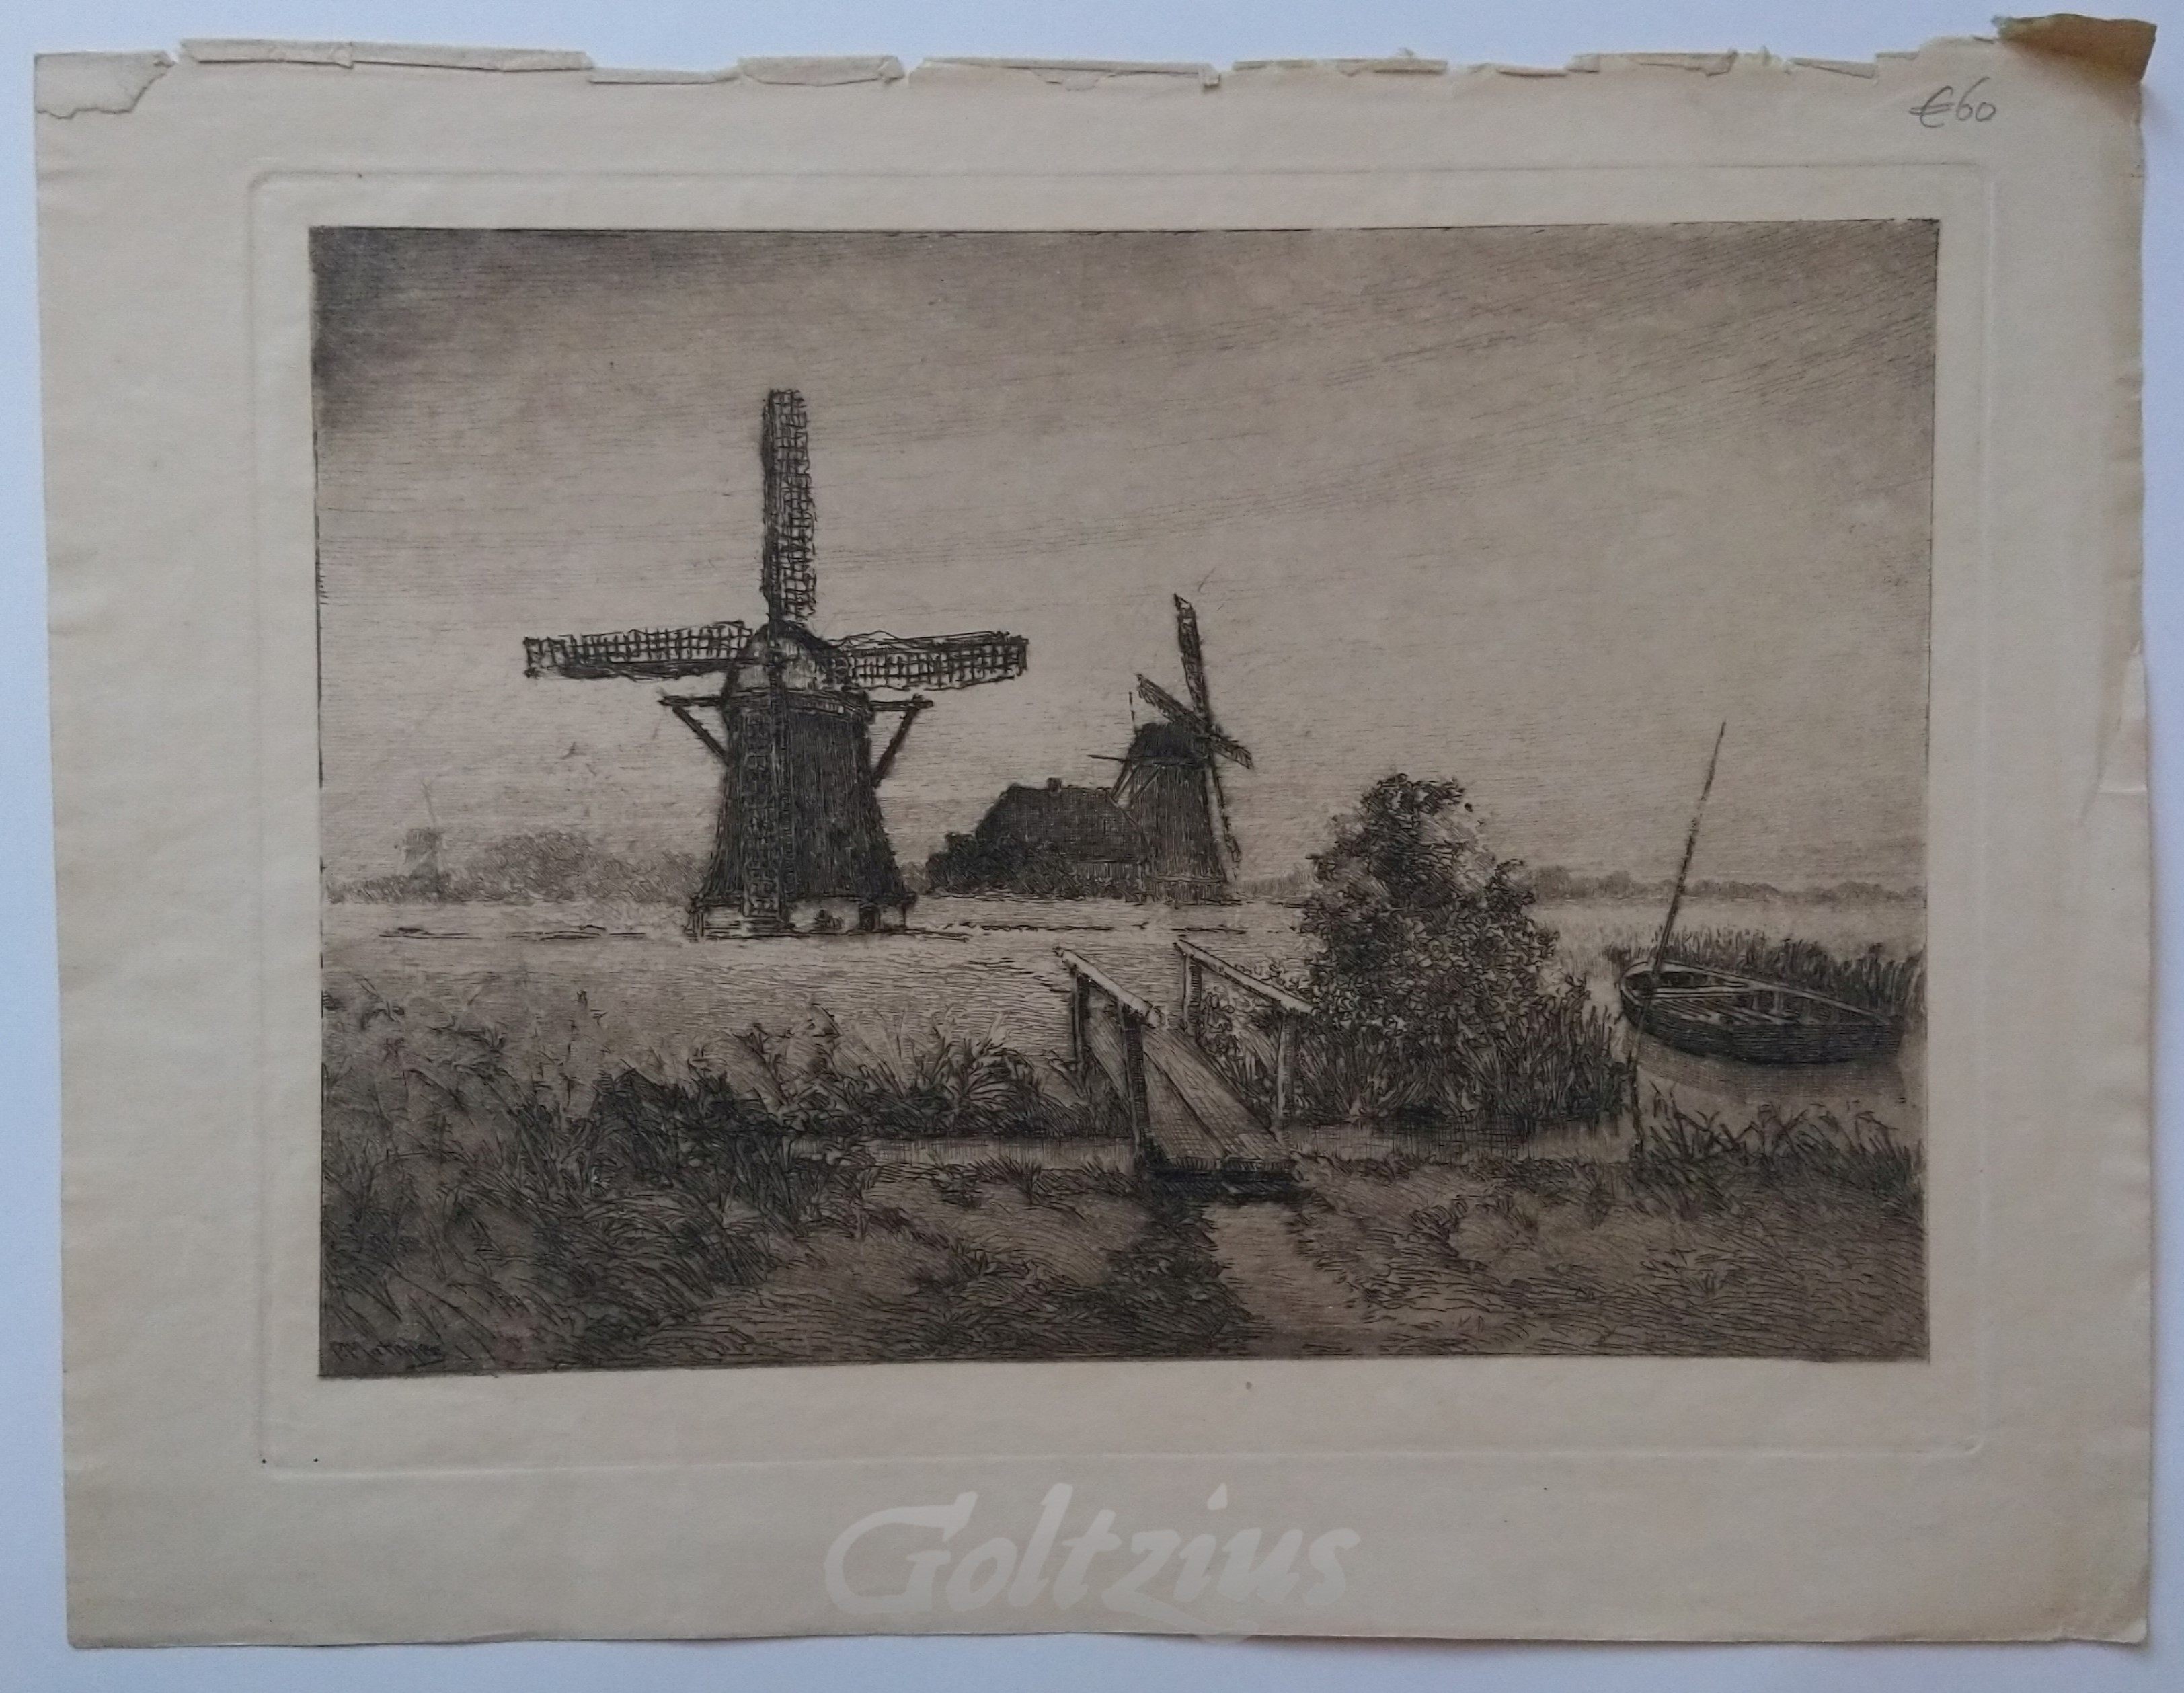 MATTHES, OSKAR PAUL, Landscape with windmills in farmland